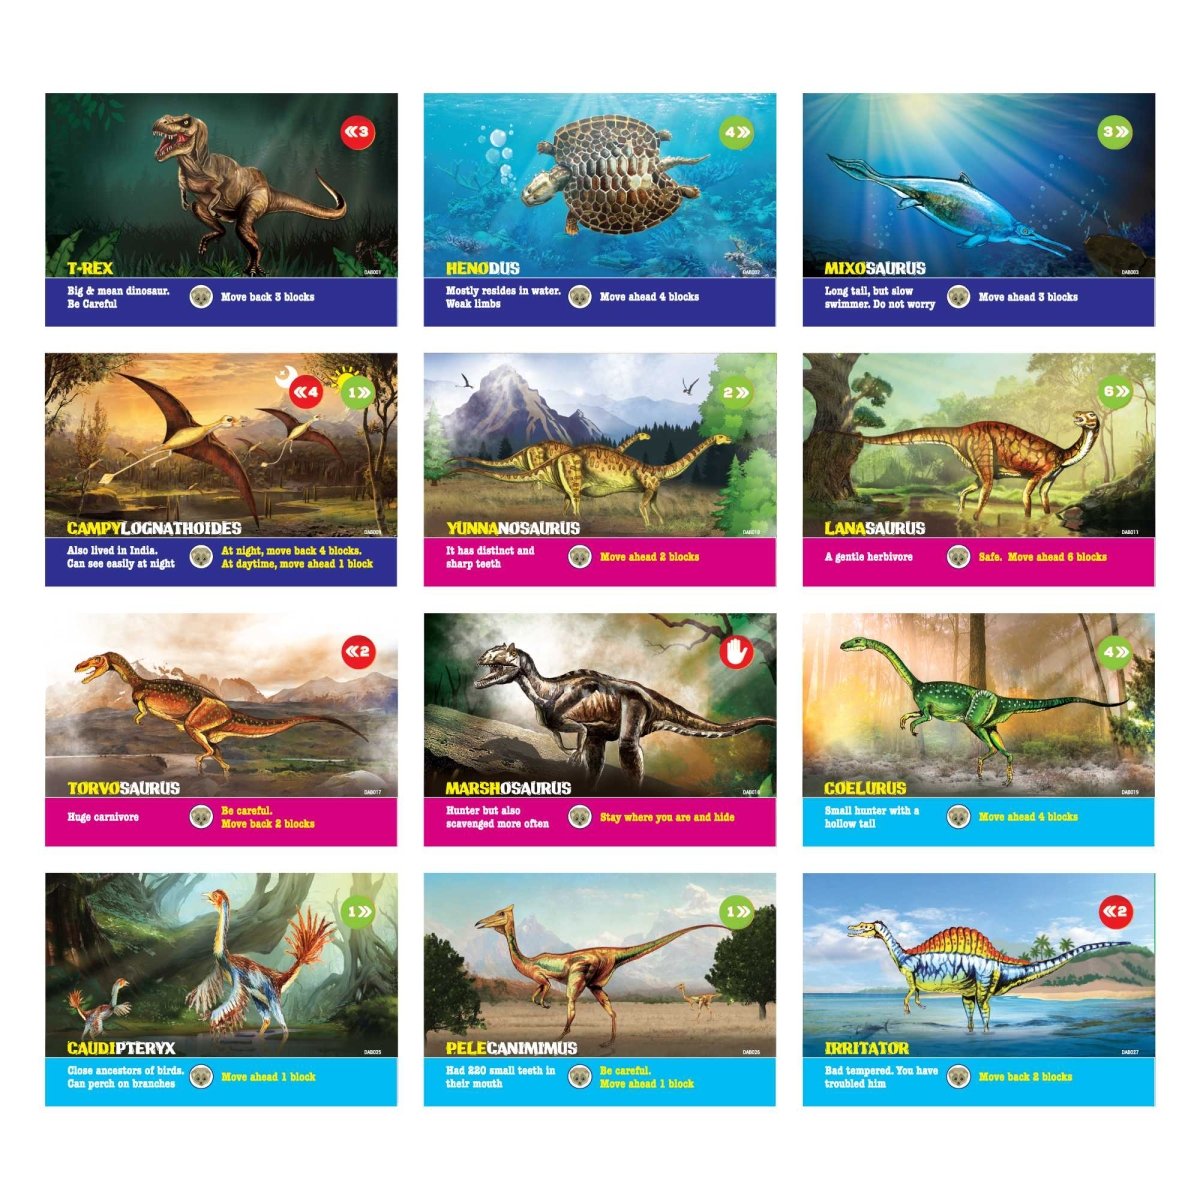 Kaadoo Animal Buddy Dino Kingdom Play & Learn Kids Board Game - AB-Dino